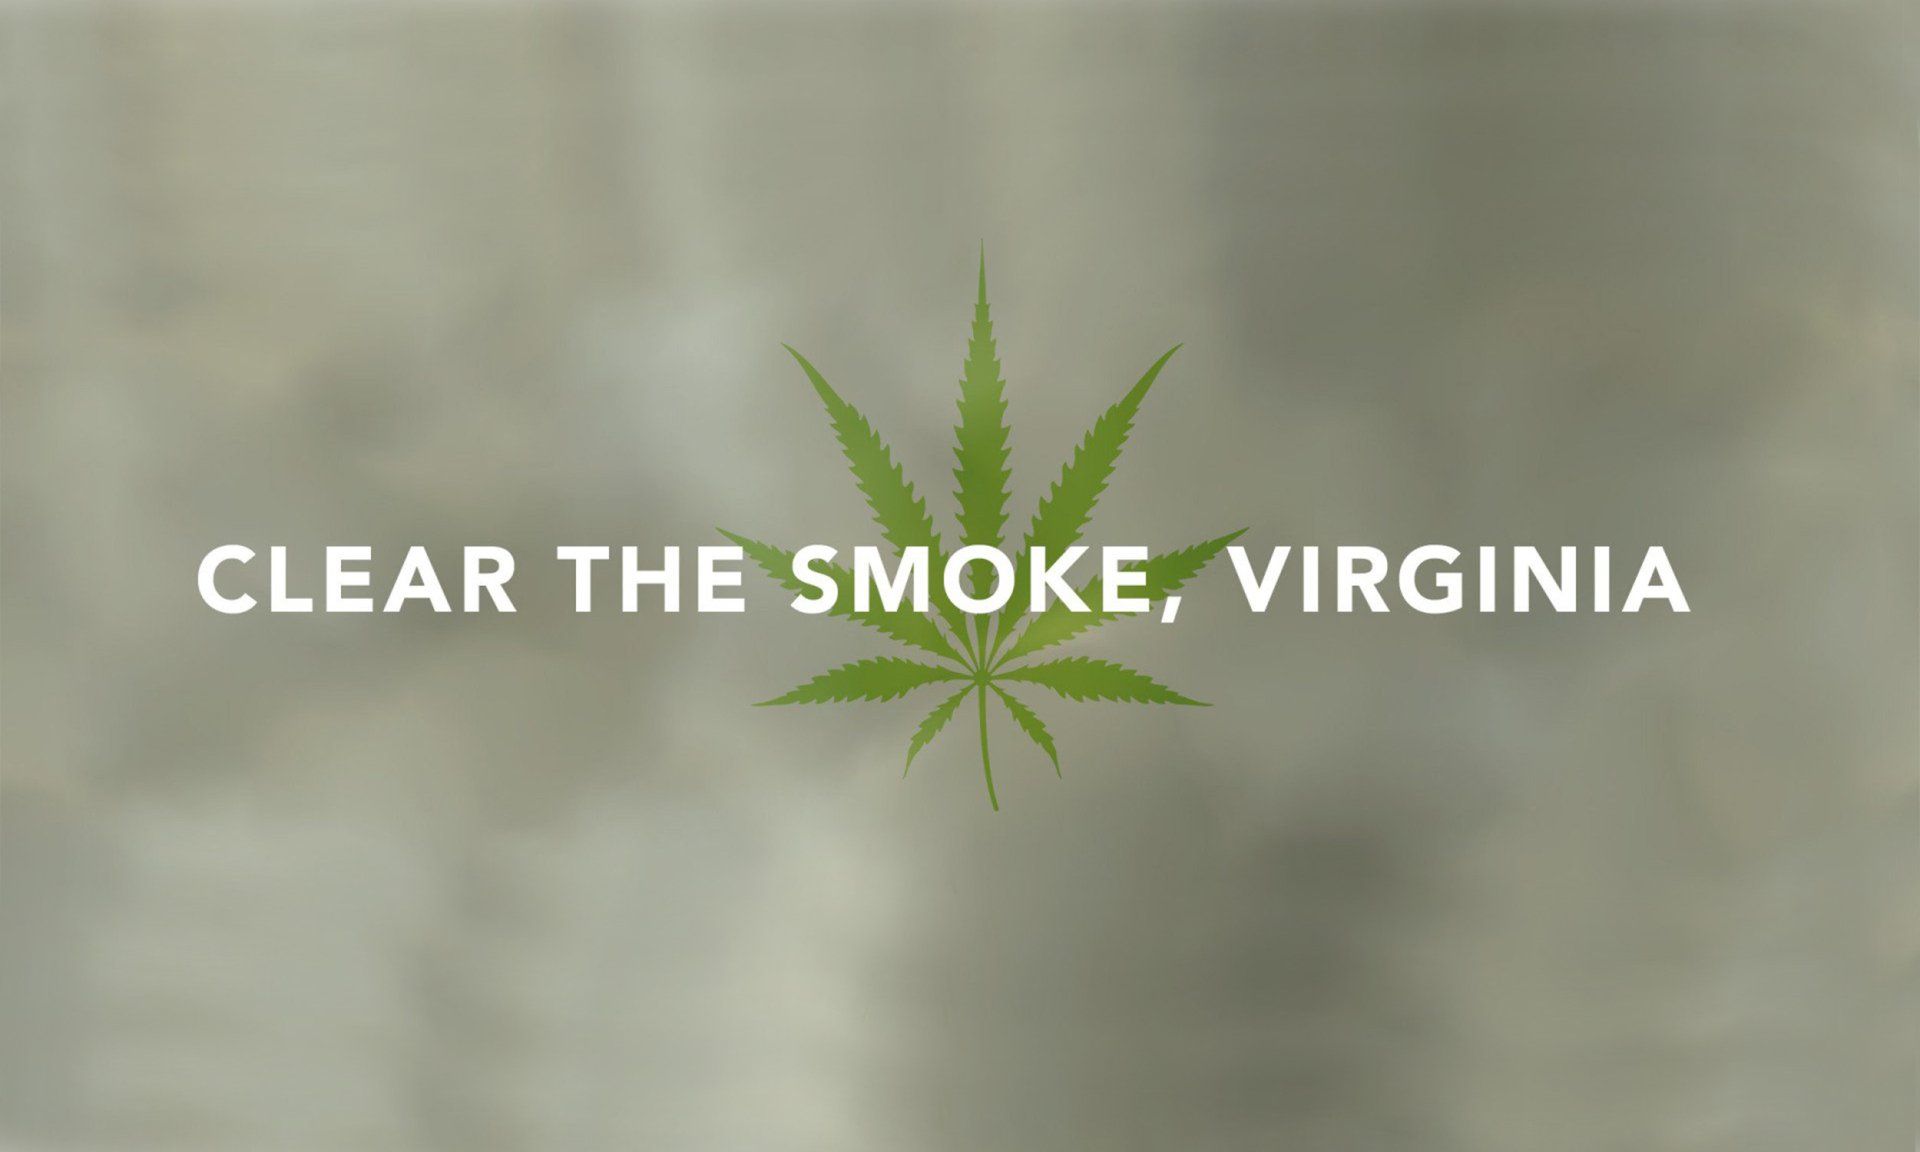 virginia marijuana cannabis laws clear the smoke lawyers